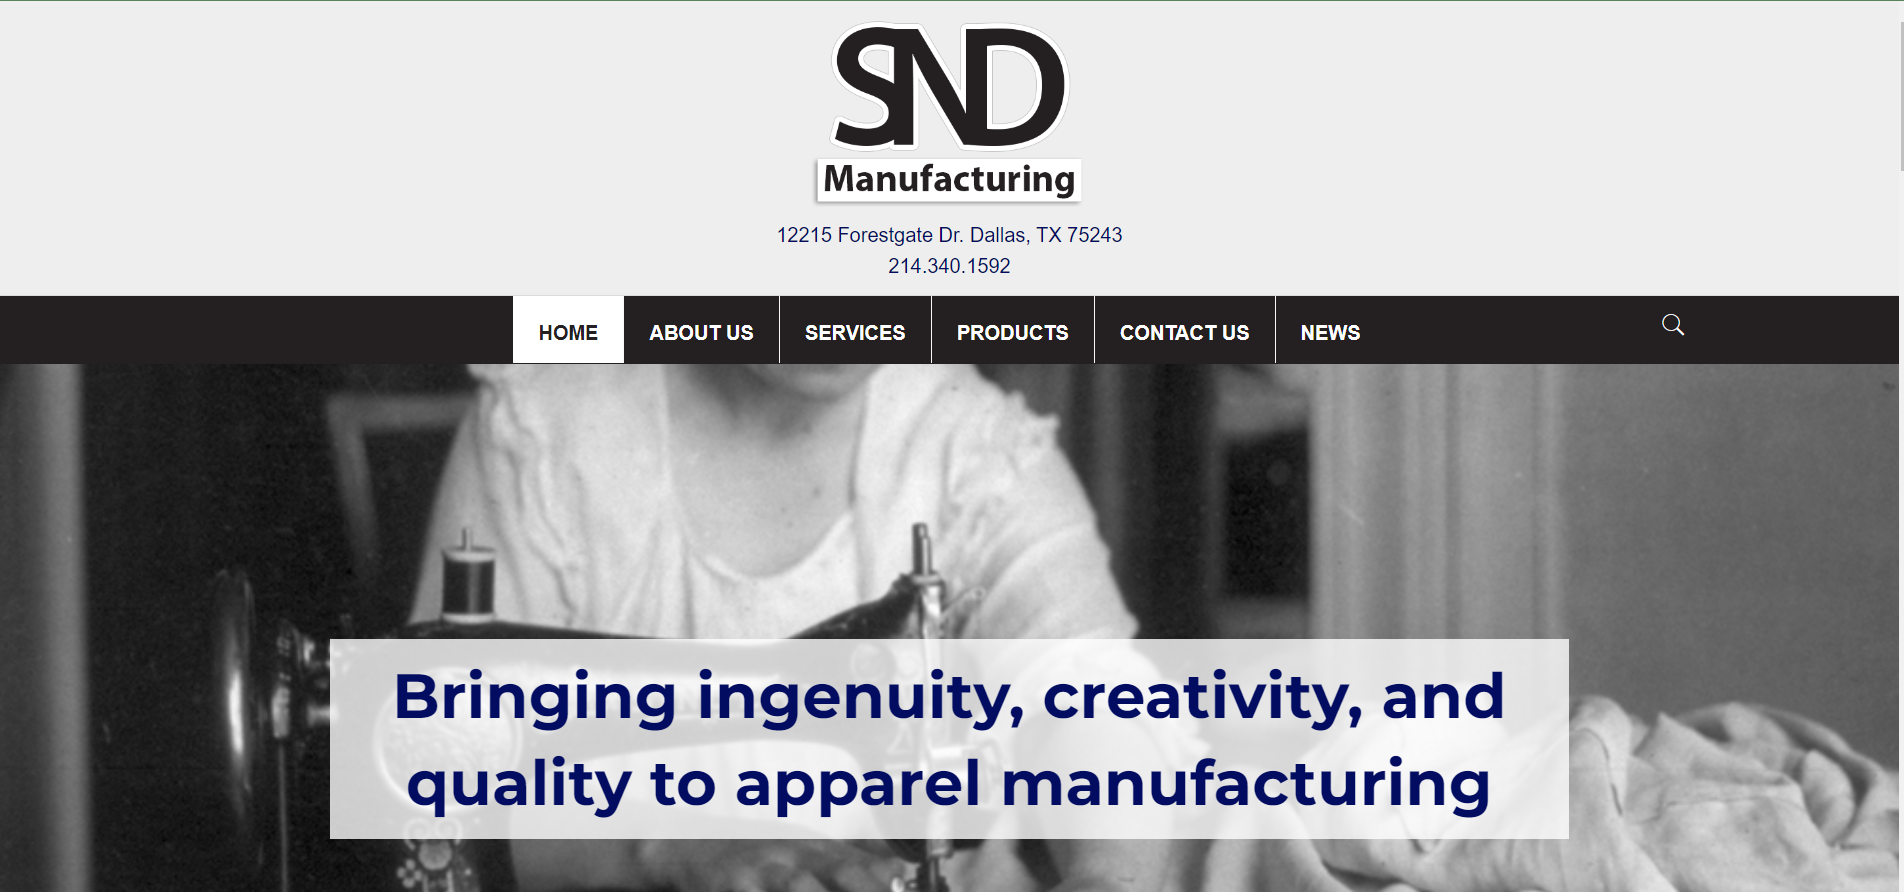 snd-manufacturing